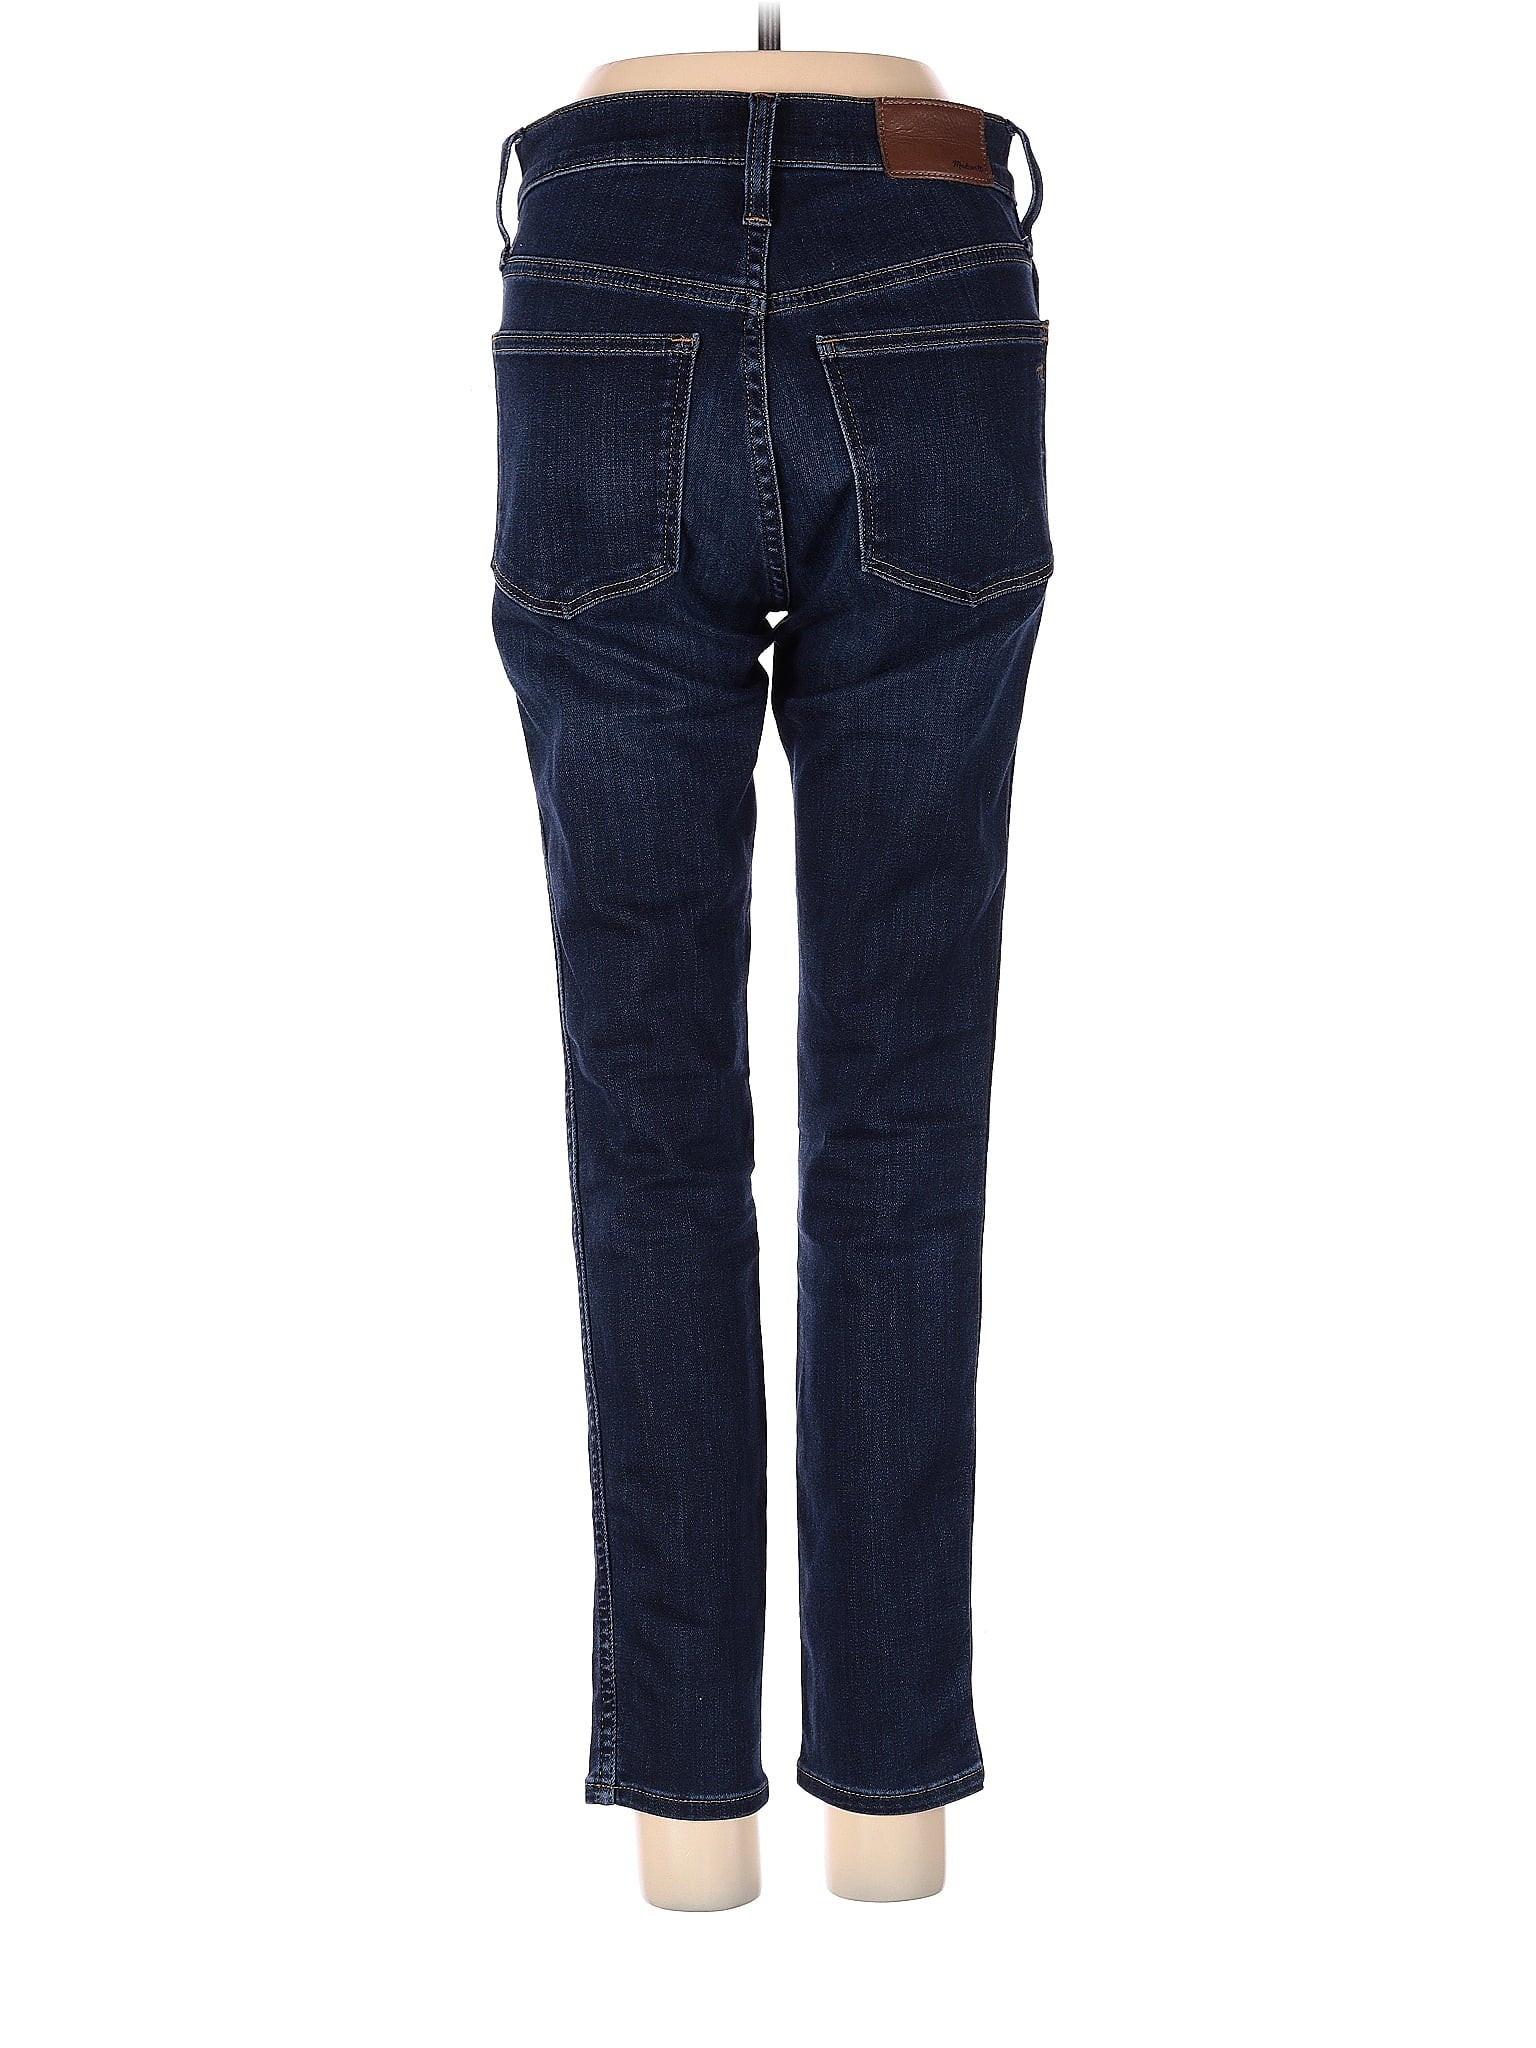 Mid-Rise Boyjeans Jeans in Dark Wash waist size - 25 P